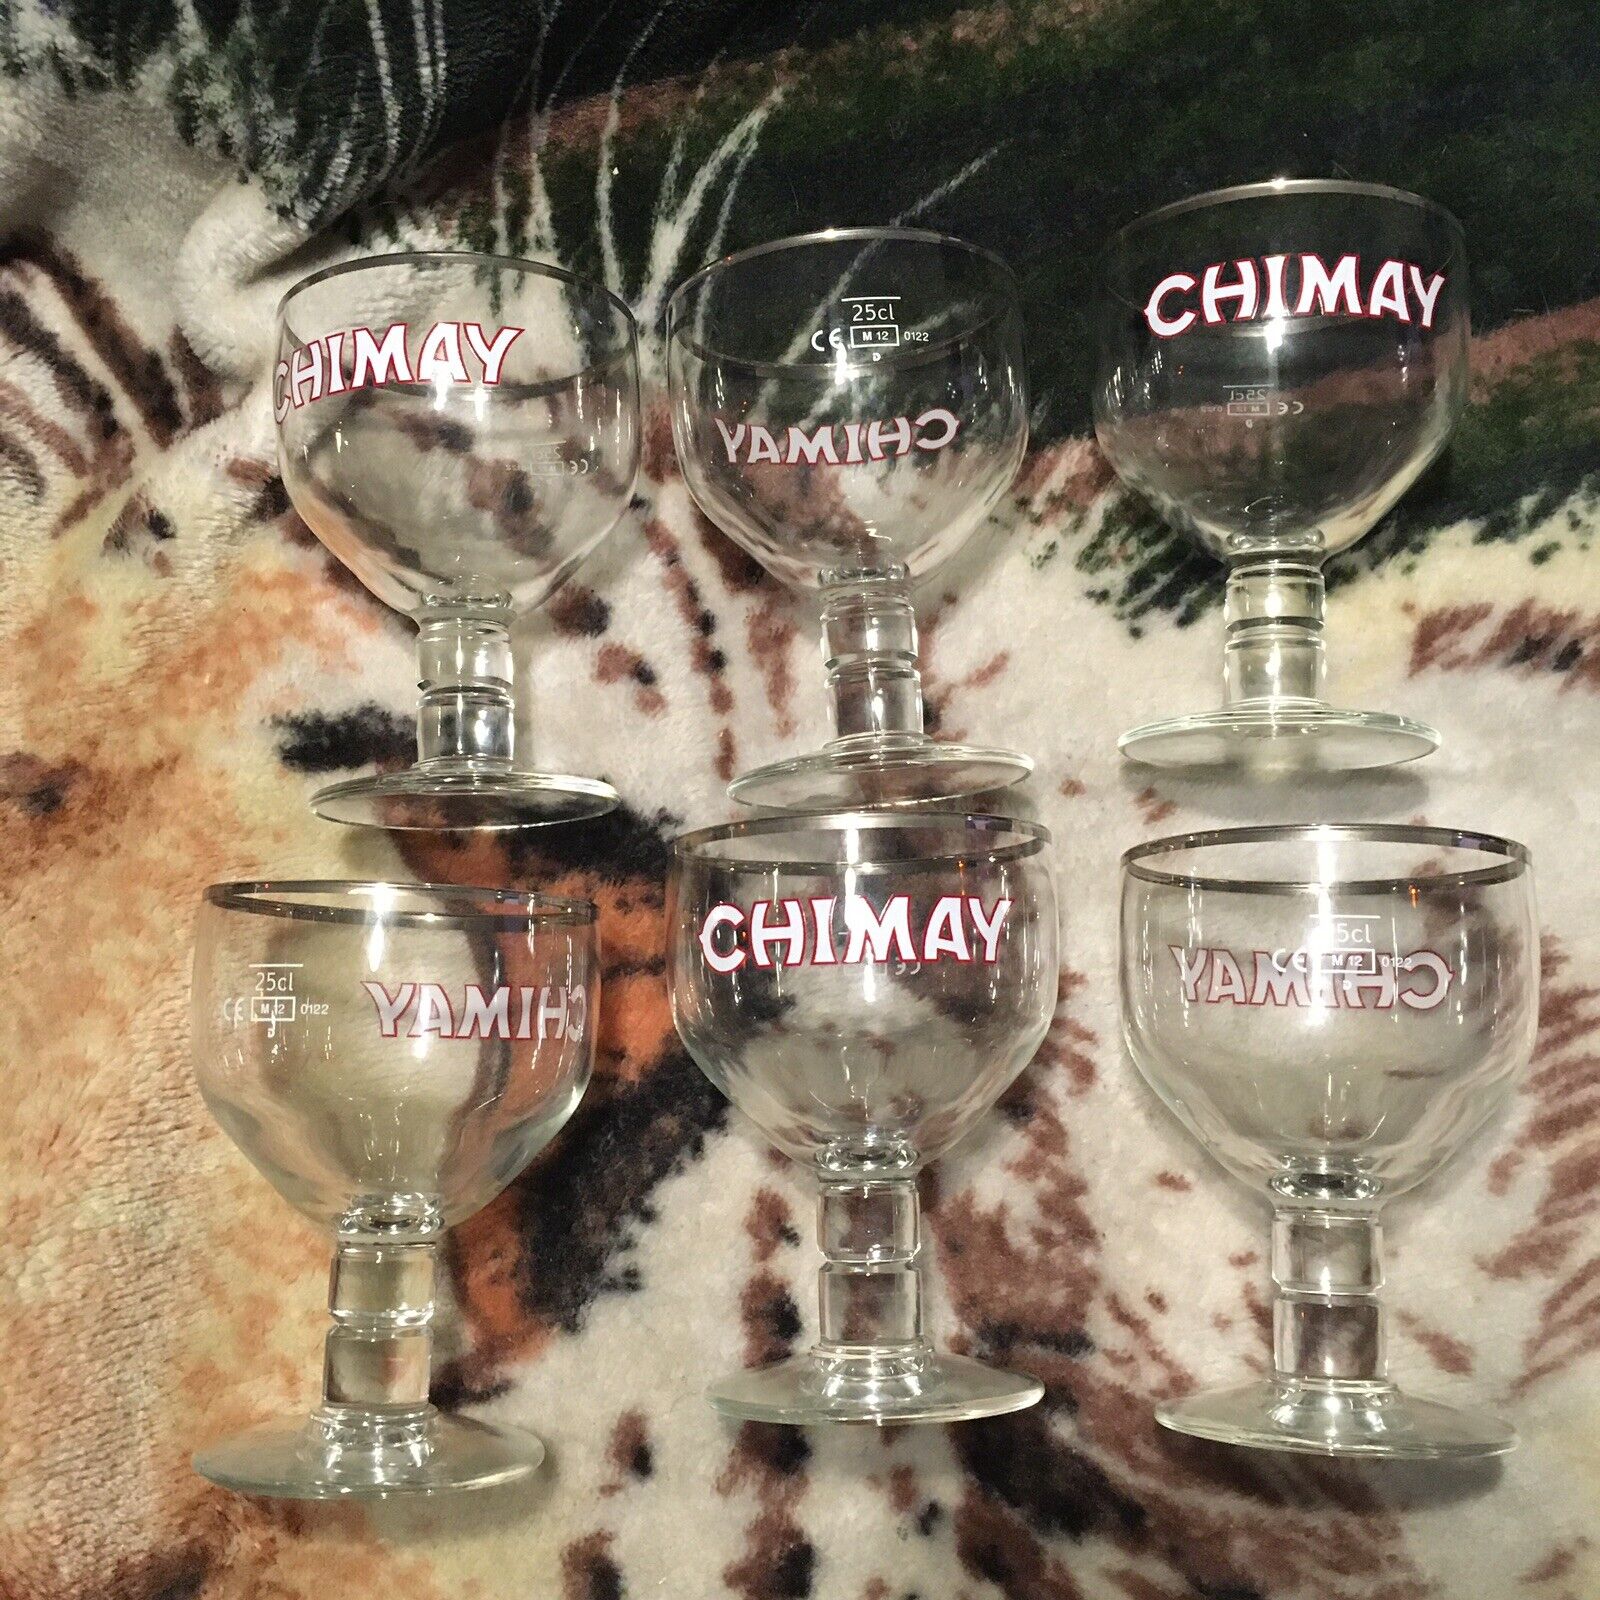 Chimay Belgian Ale Chalice Goblets Beer Glasses .25 CL Lot of 6  Silver Rimmed